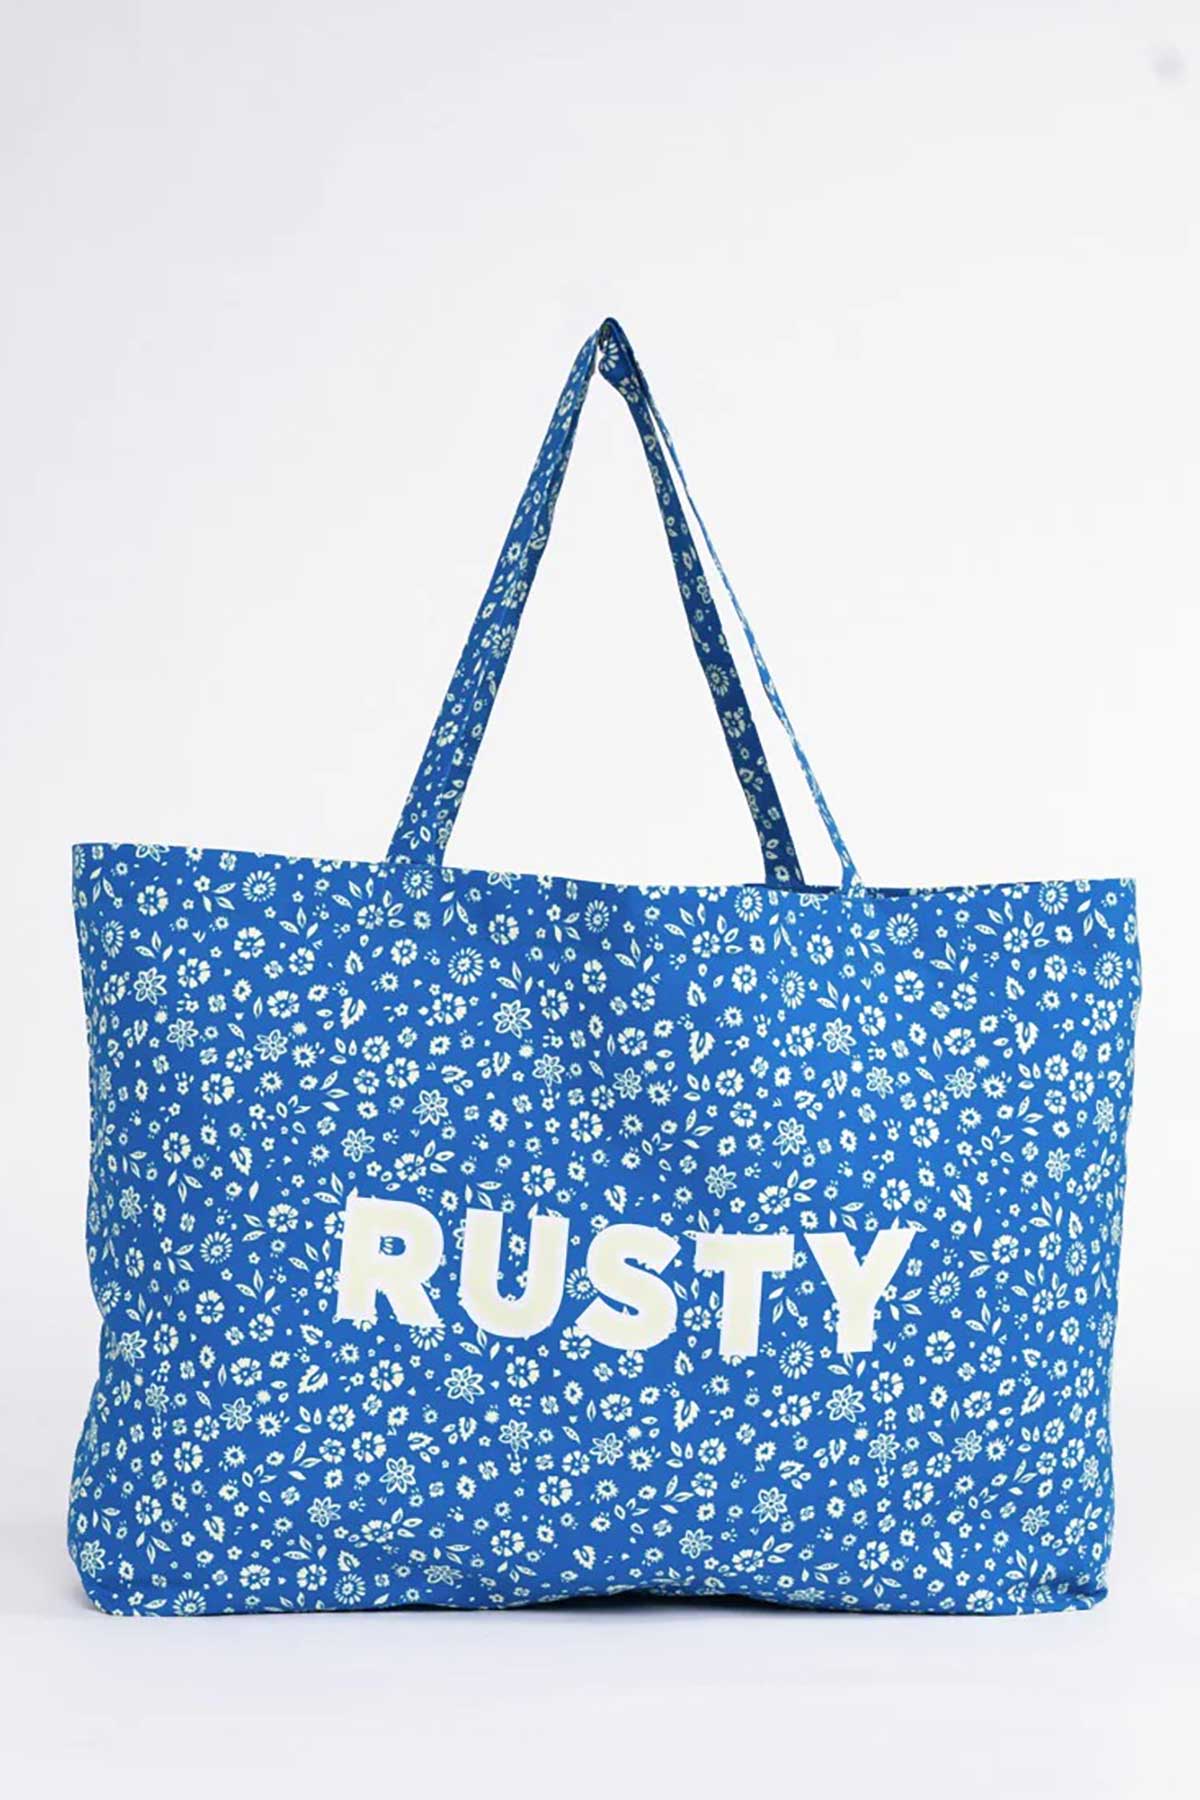 Rusty Chosen Tote Bag